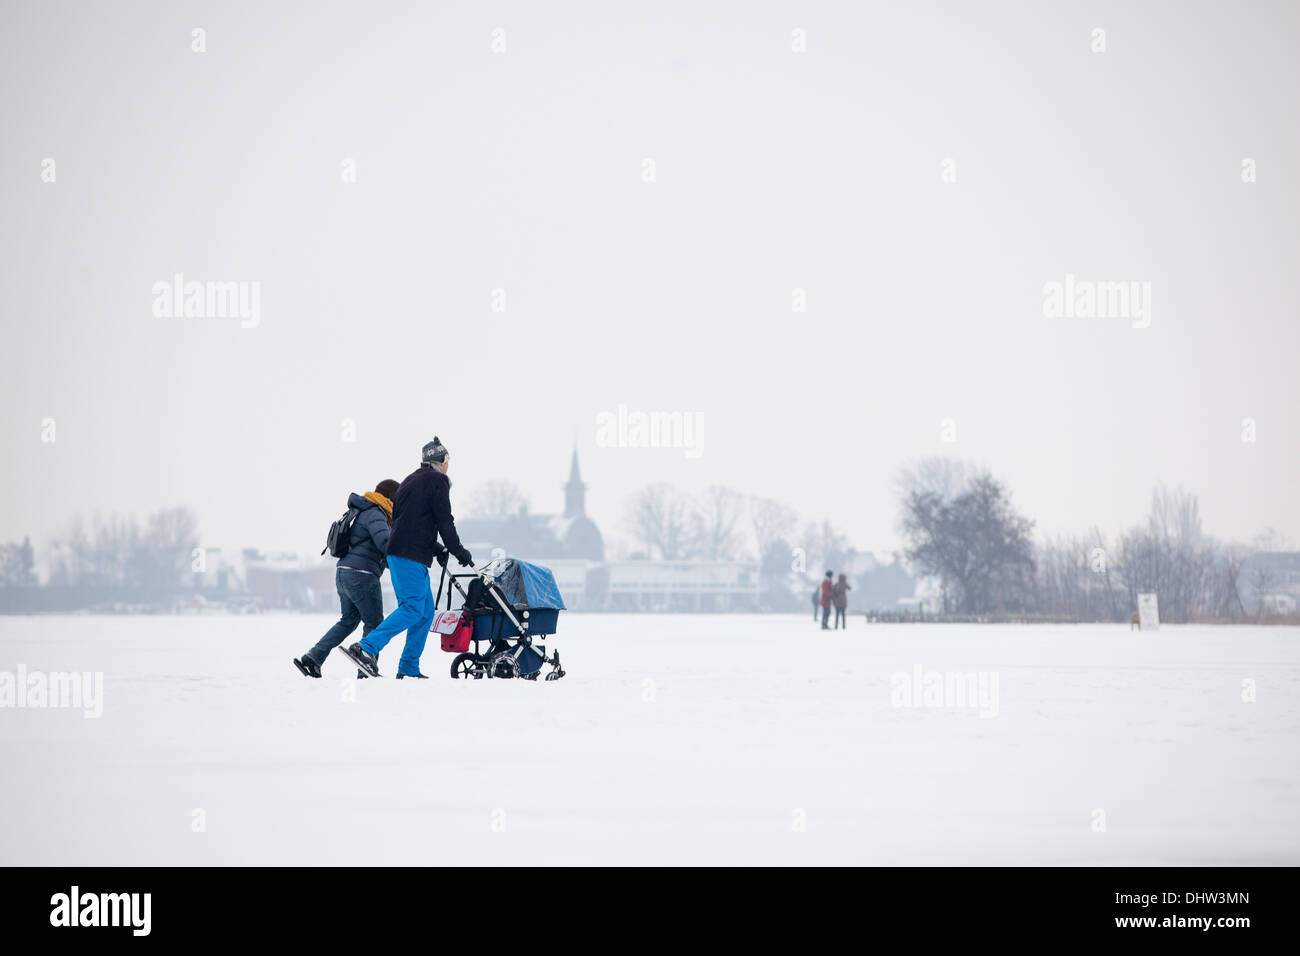 herlands, Loosdrecht, Lakes called Loosdrechtse Plassen. Winter. Family ice skating with buggy Stock Photo